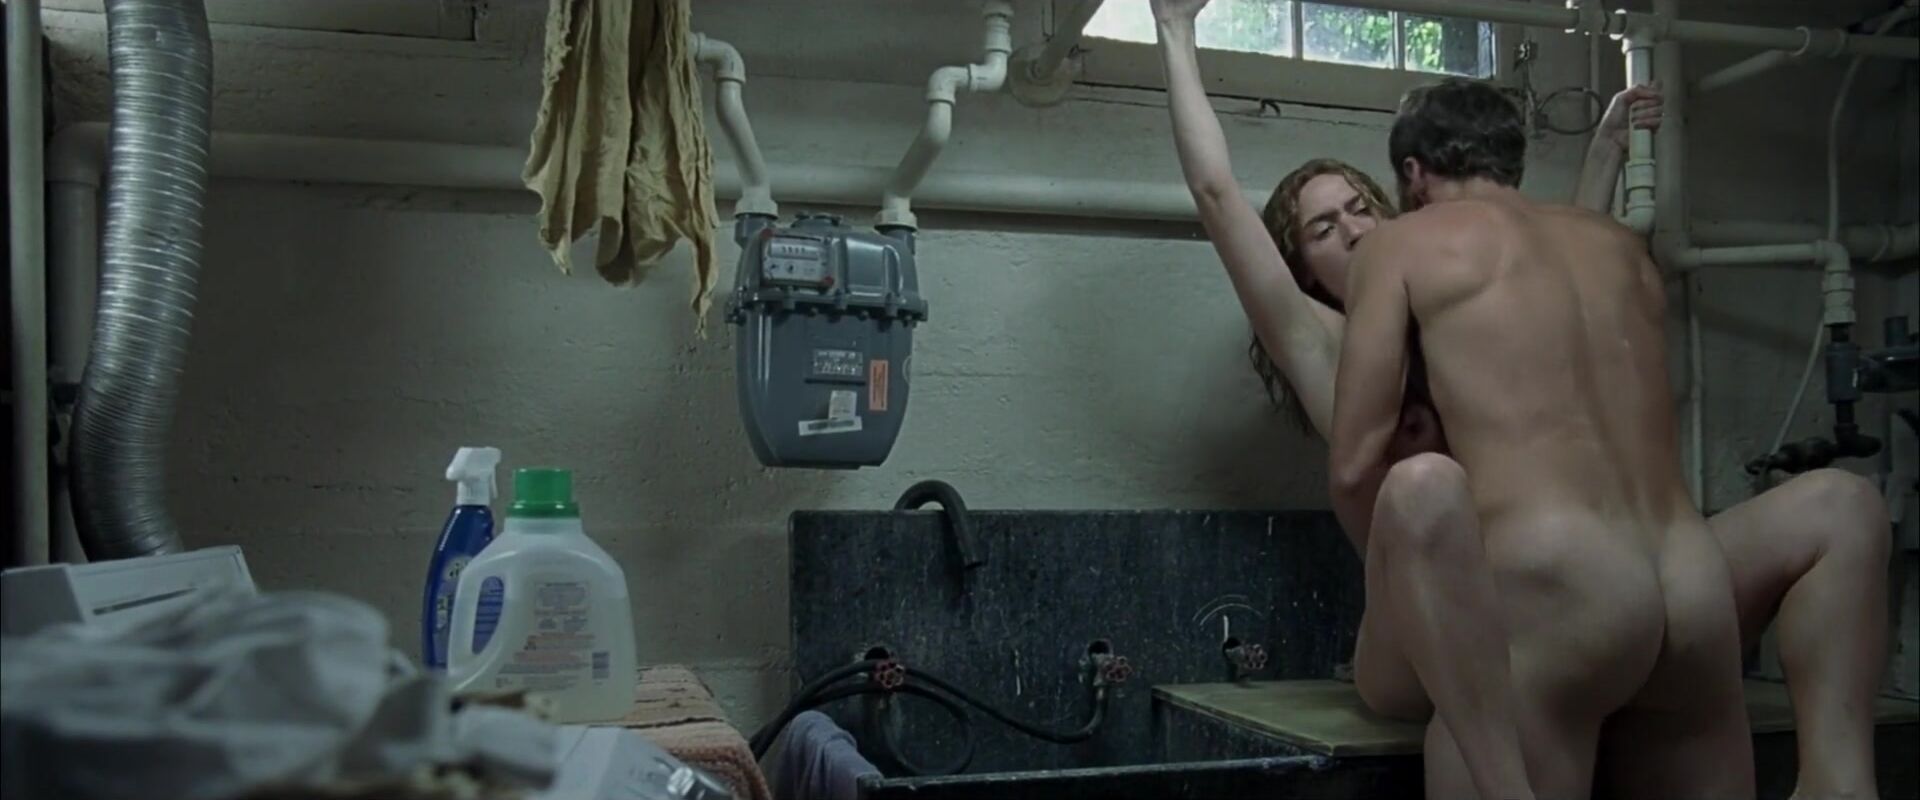 Caseiro Little C celebrity Kate Winslet is fucked by Patrick Wilson in their cabin (2006) JoyReactor